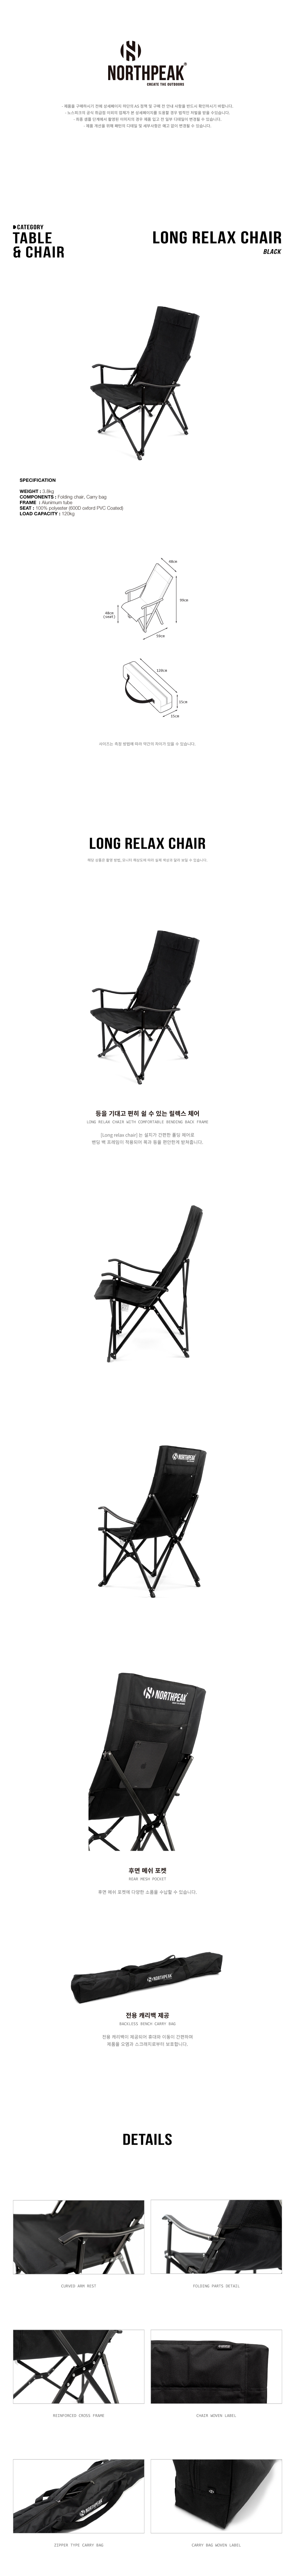 Long-relax-chair_black-2023-1_180651_143520.jpg